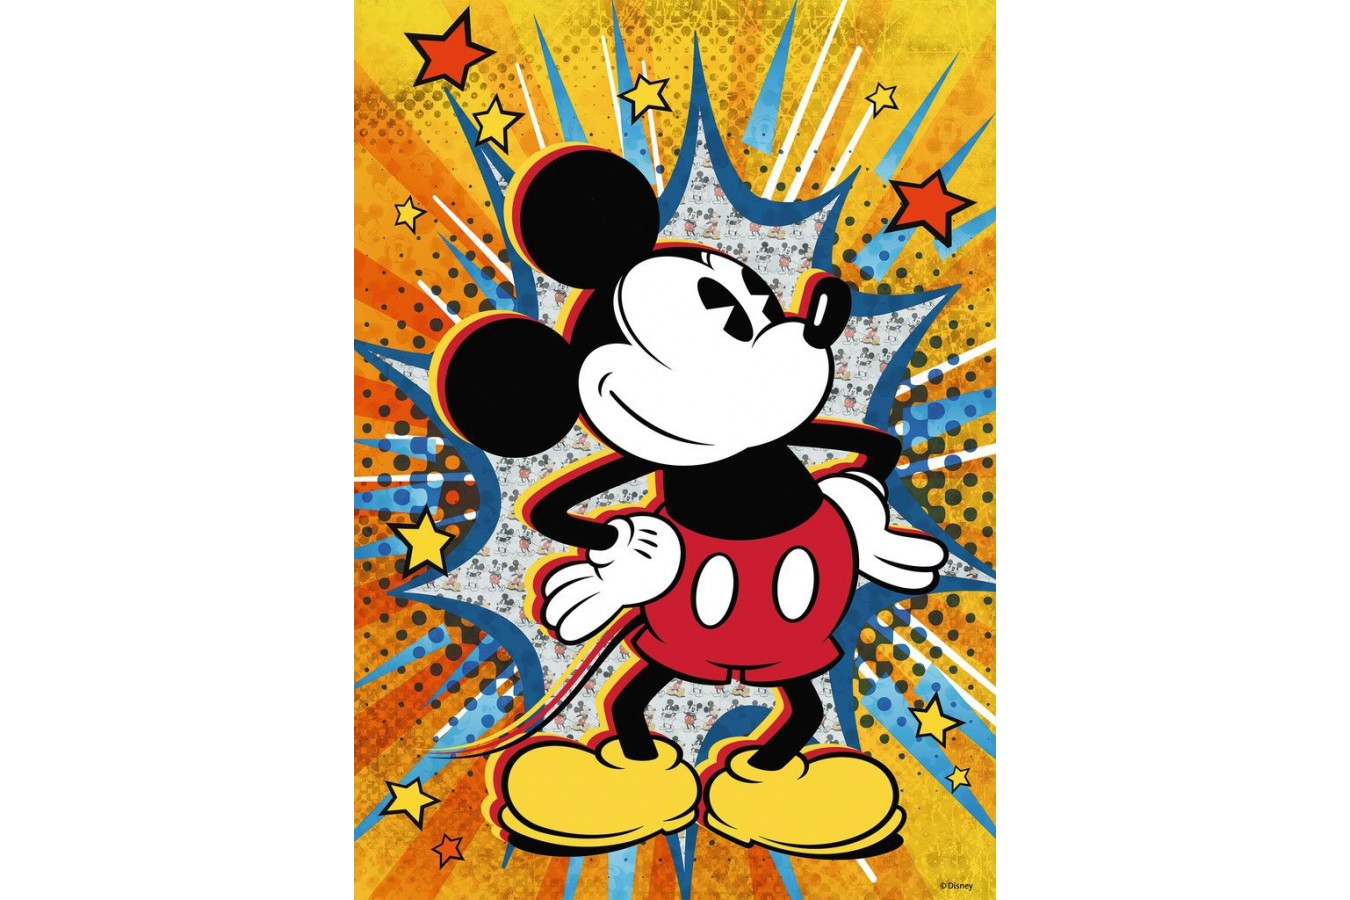 Puzzle Ravensburger - Retro Mickey, 1000 piese (15391)